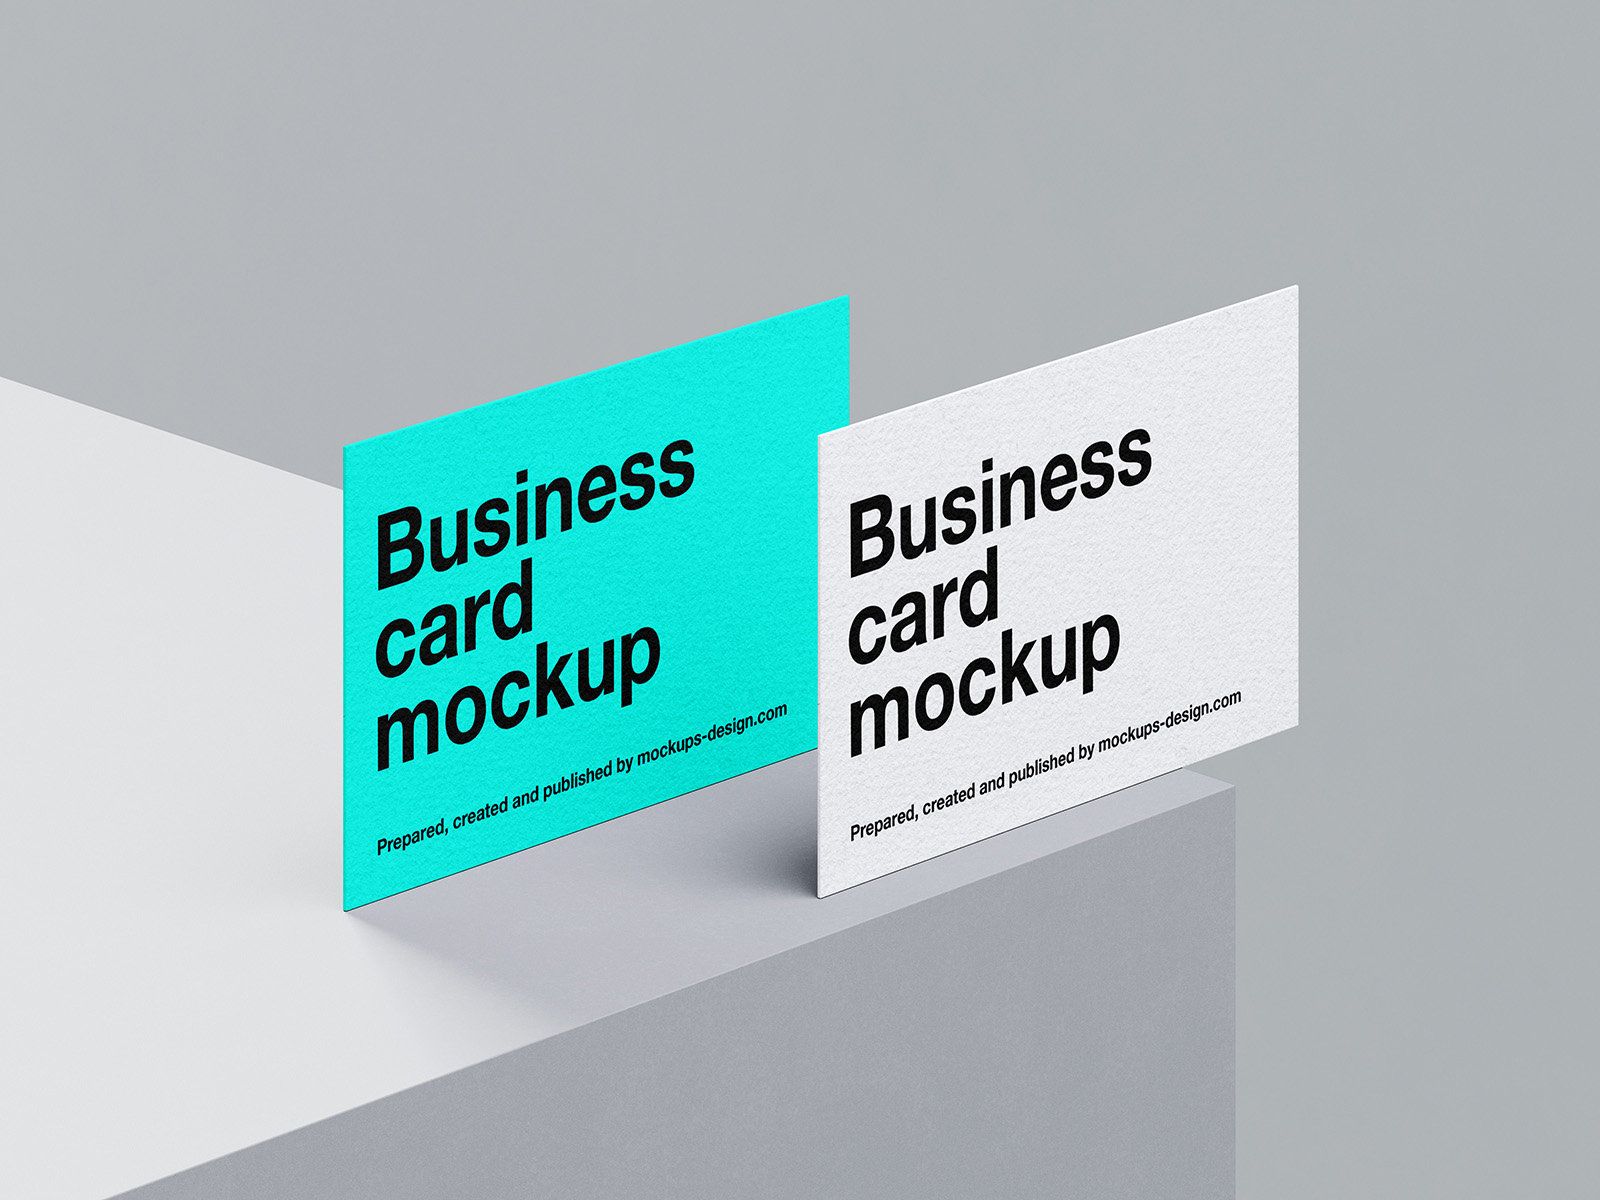 4 Minimal Shots of Business Cards Mockup FREE PSD